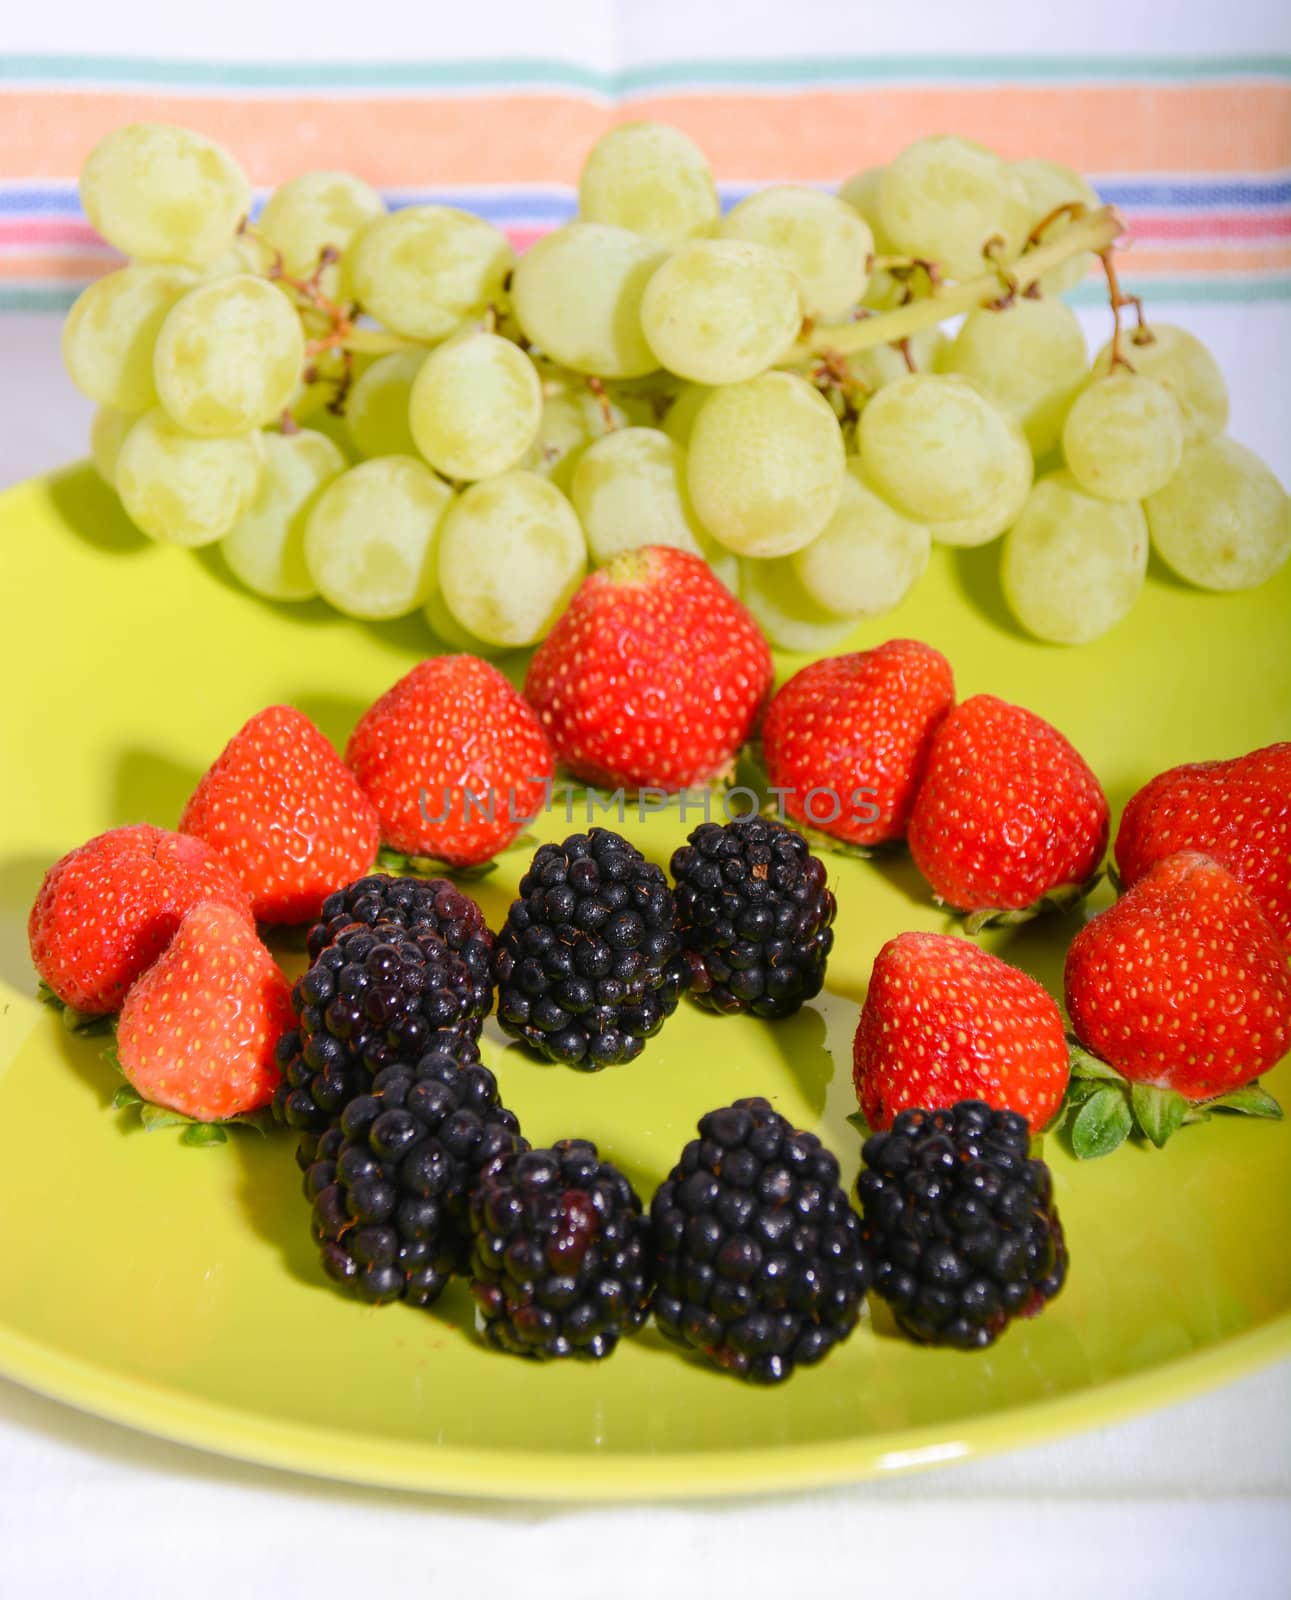 healthy fruits 12 by iacobino